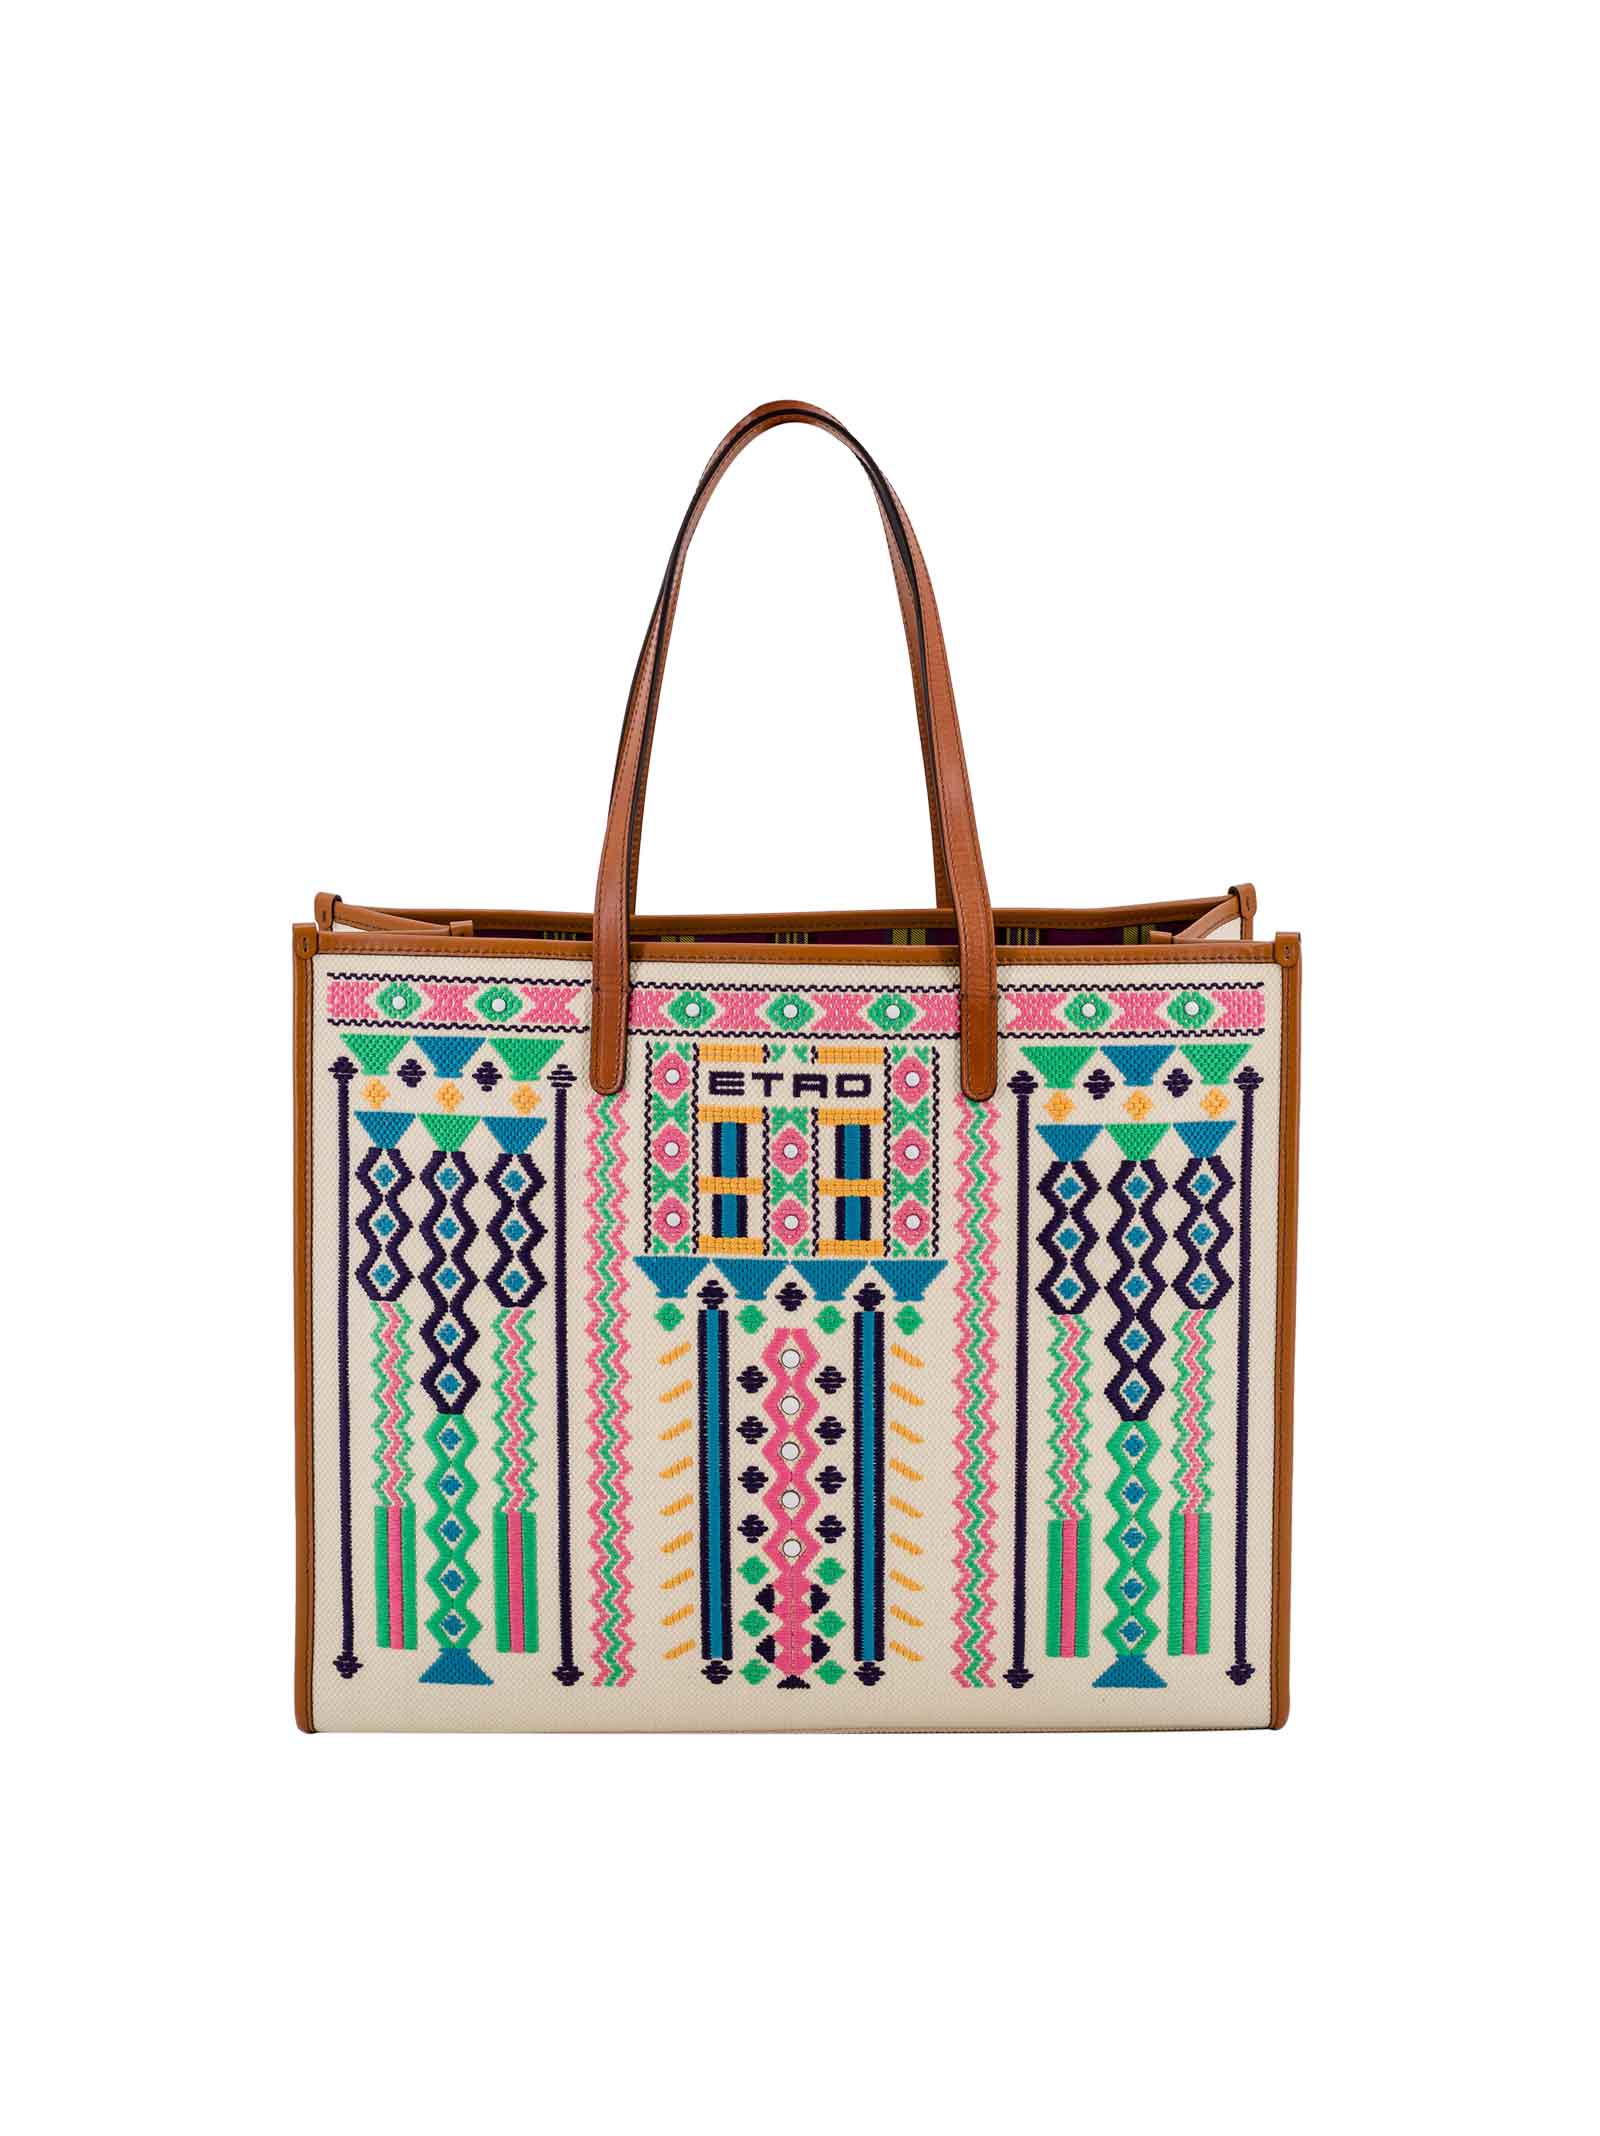 Etro Embroidered Design Tote Bag In Fantasia